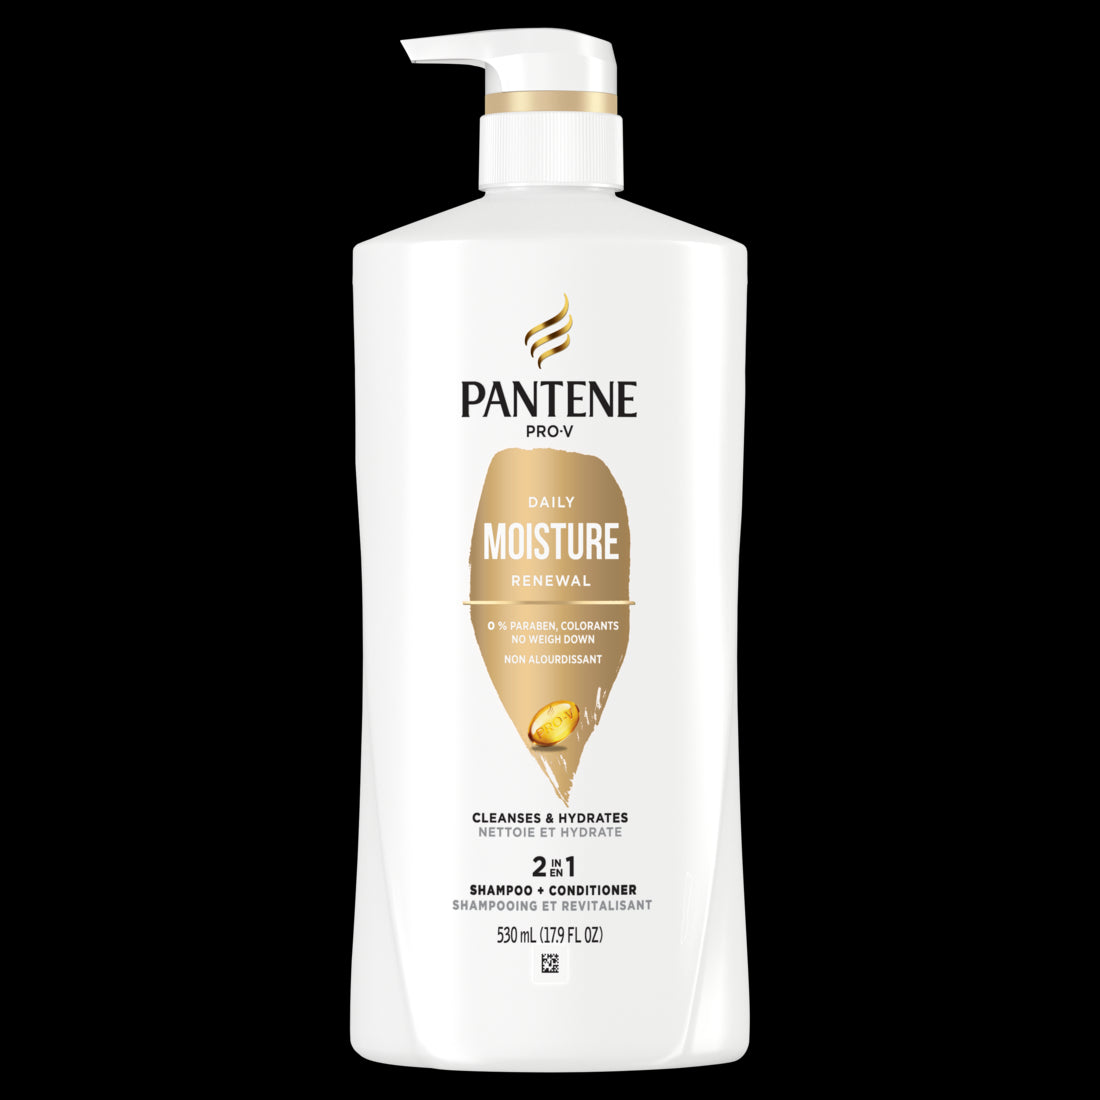 Pantene PRO-V Daily Moisture Renewal 2in1 Shampoo & Conditioner - 17.9oz/4pk